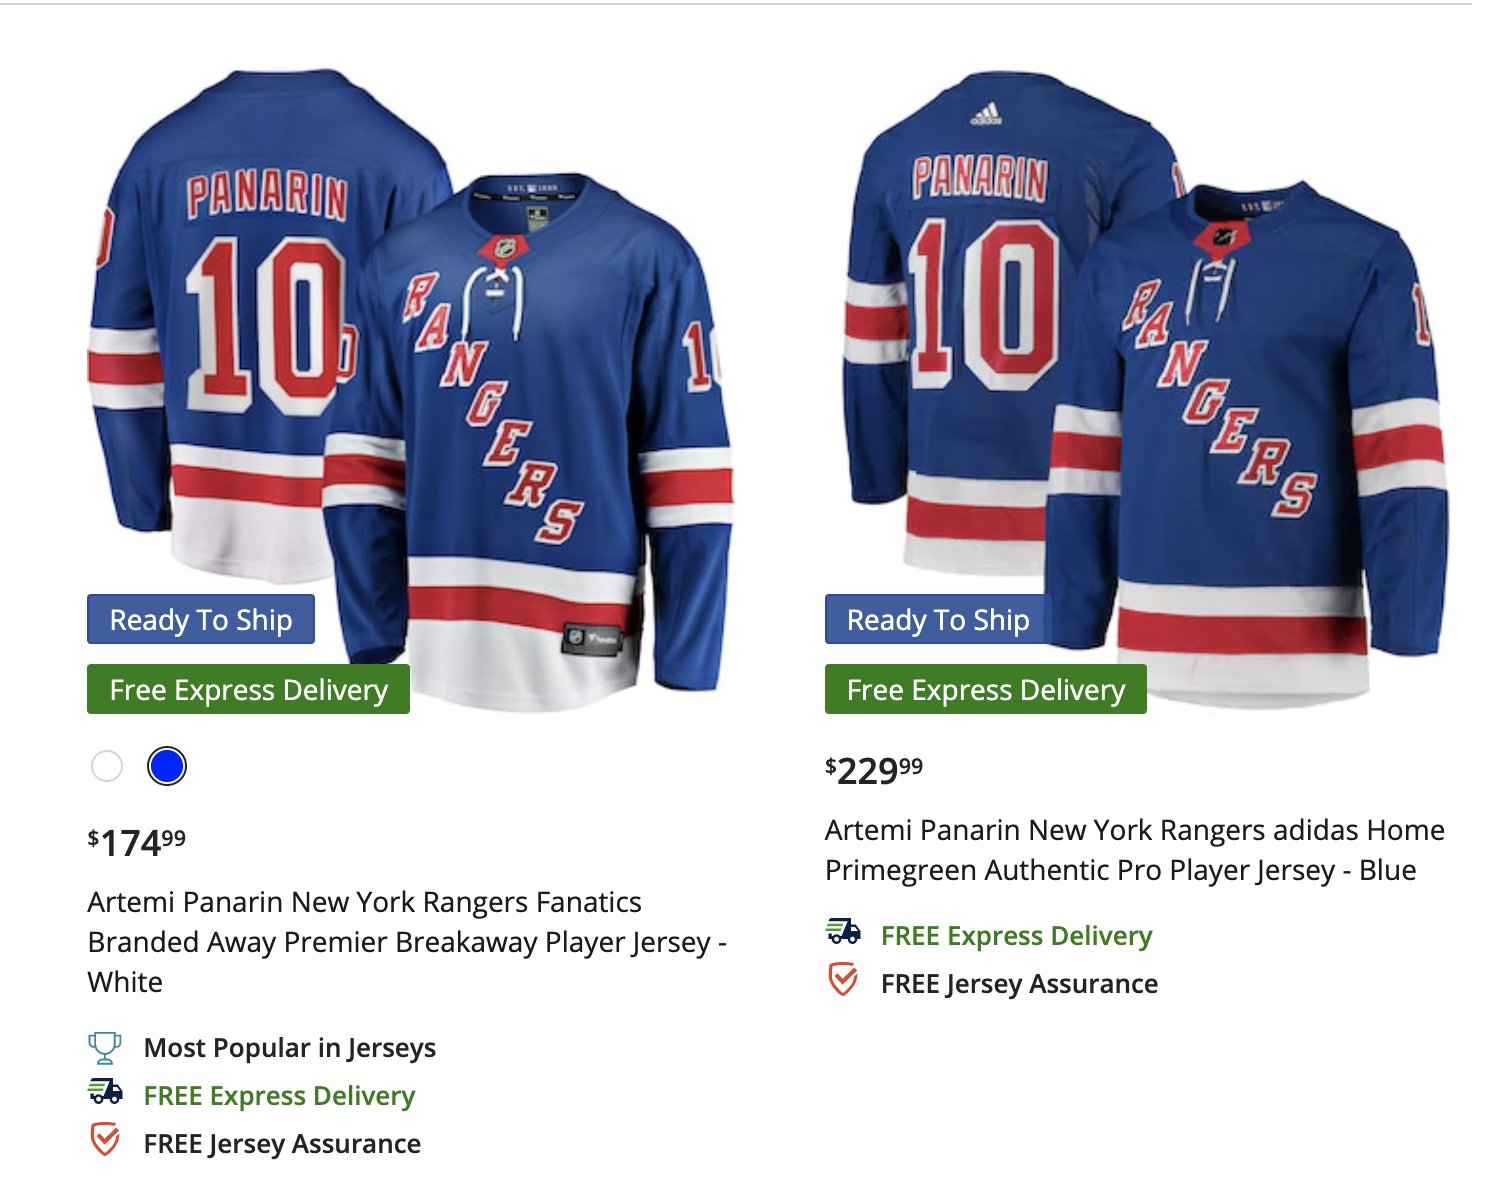 Artemi Panarin New York Rangers Men's Adidas Authentic Hockey